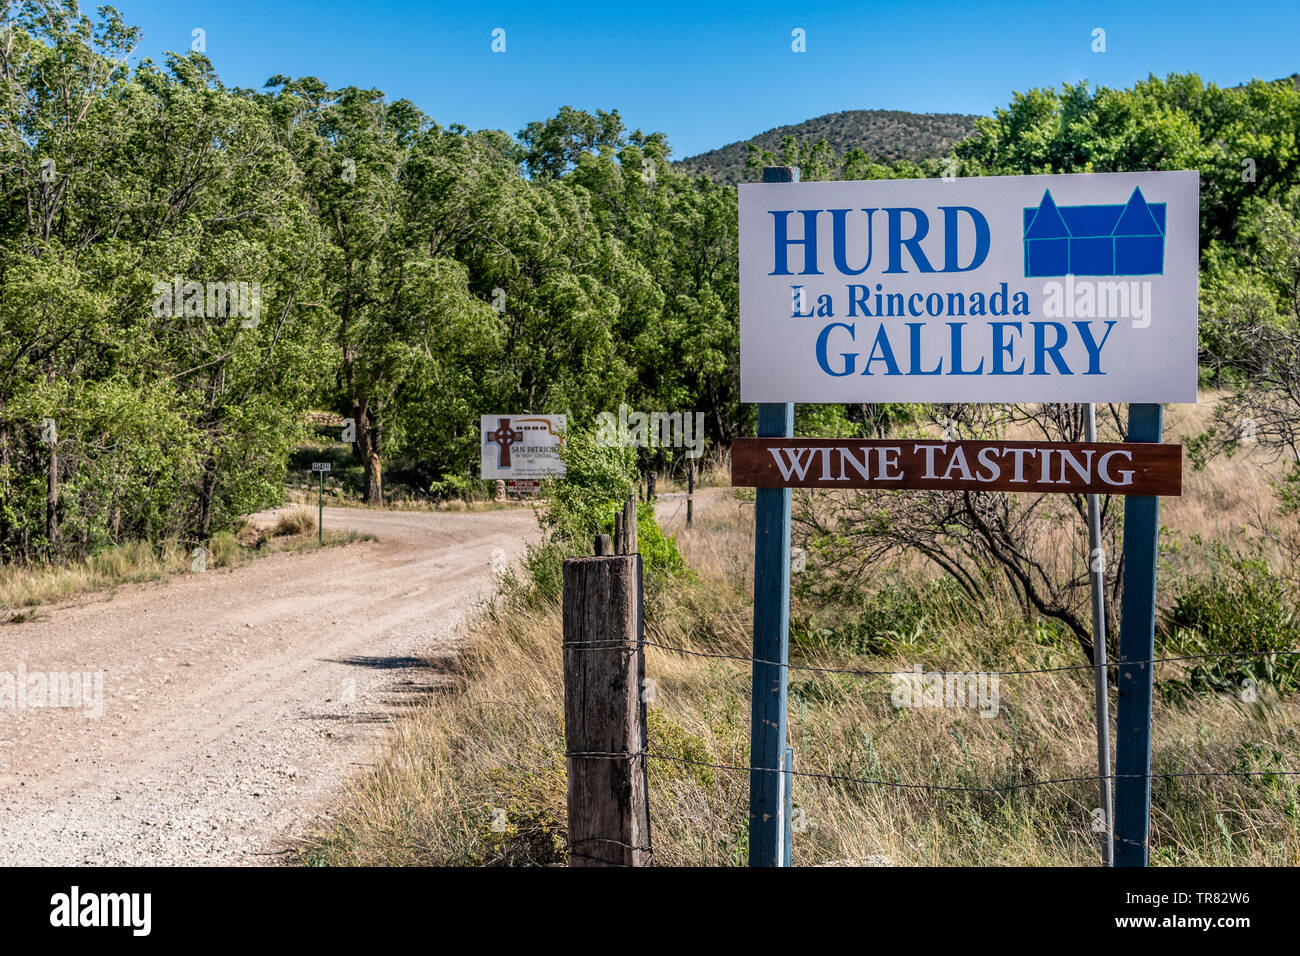 Hurd La Rinconada Gallery sign, Hurd Gallery featuring artists Peter Hurd, Michael Hurd and Henriette Wyeth in San Patricio, New Mexico, USA. Stock Photo